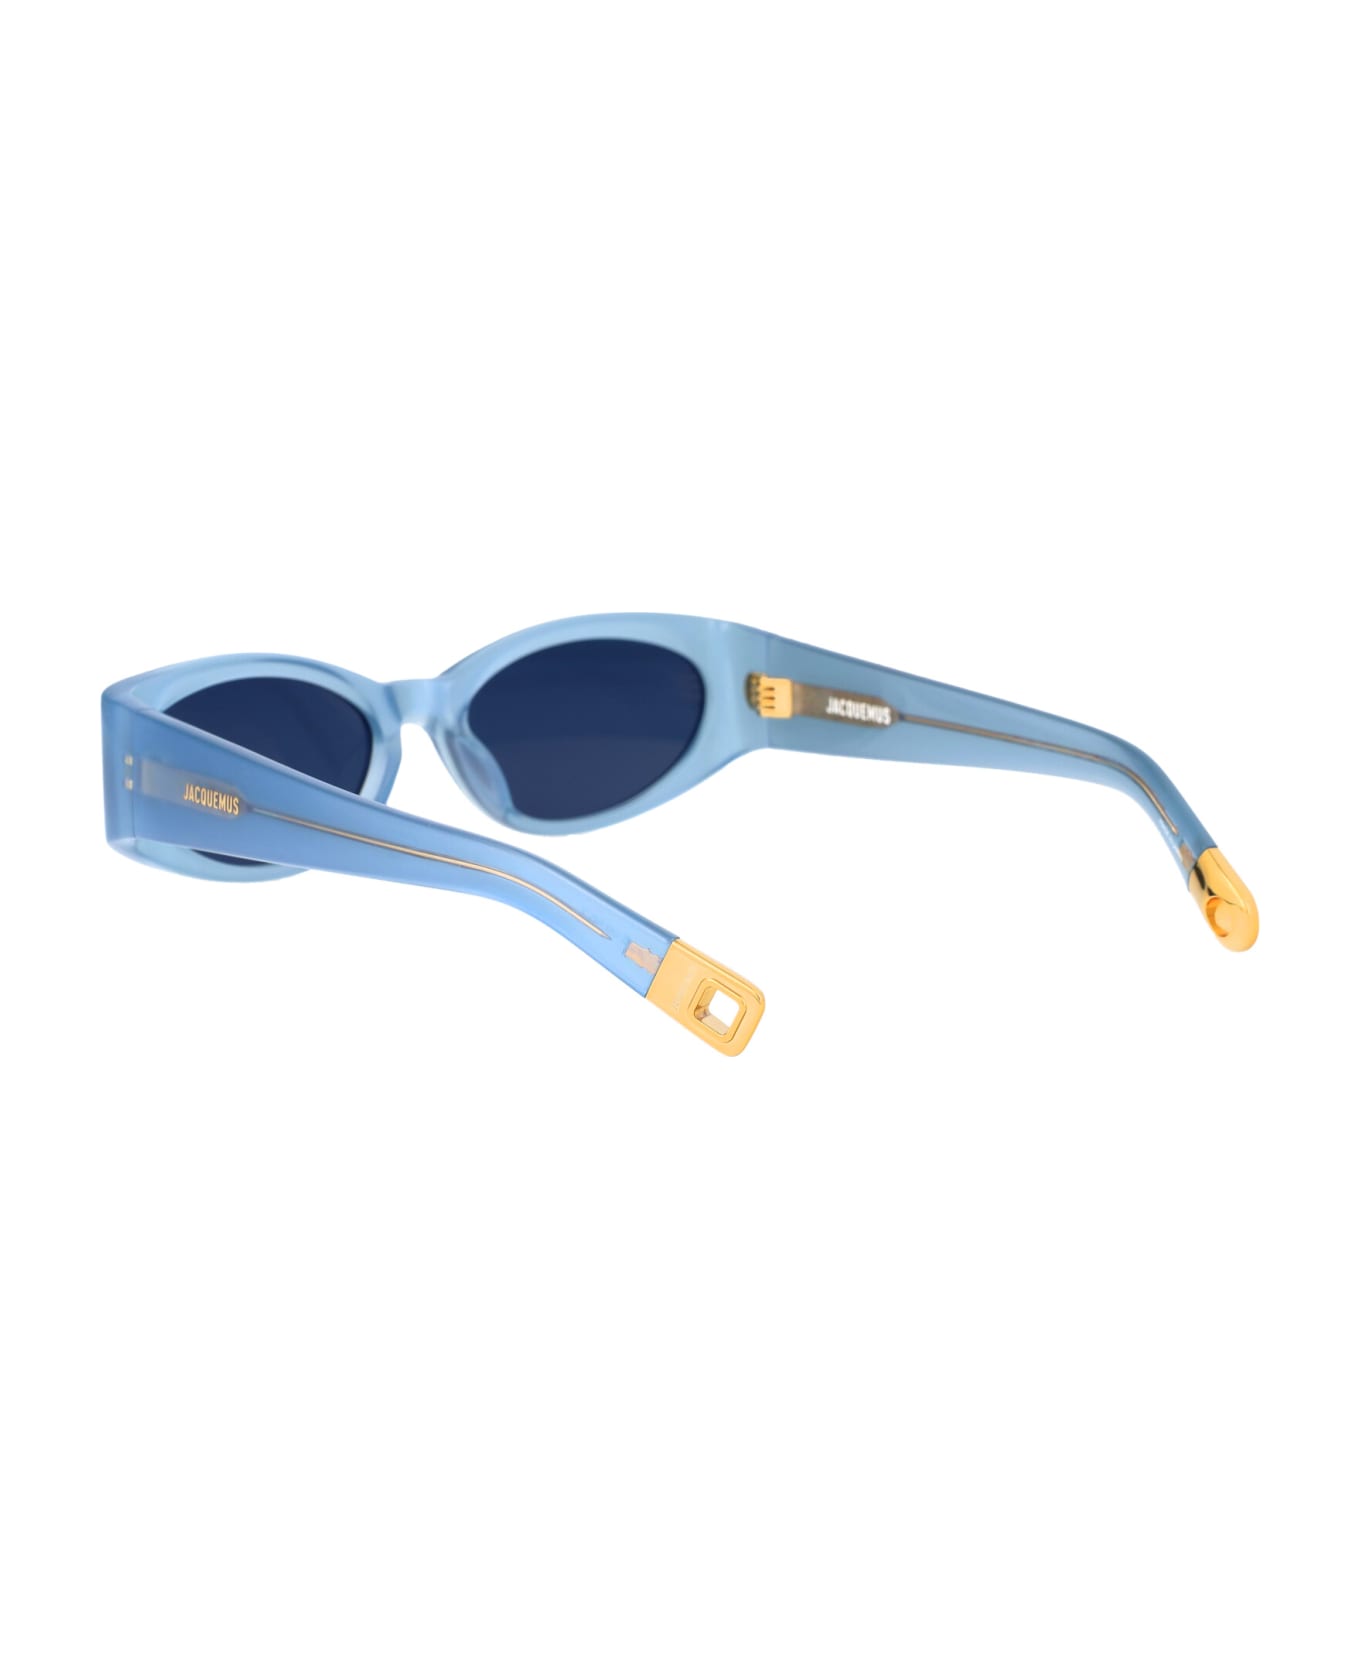 Jacquemus Ovalo Sunglasses - 05 BLUE PEARL/ YELLOW GOLD/ GREEN サングラス